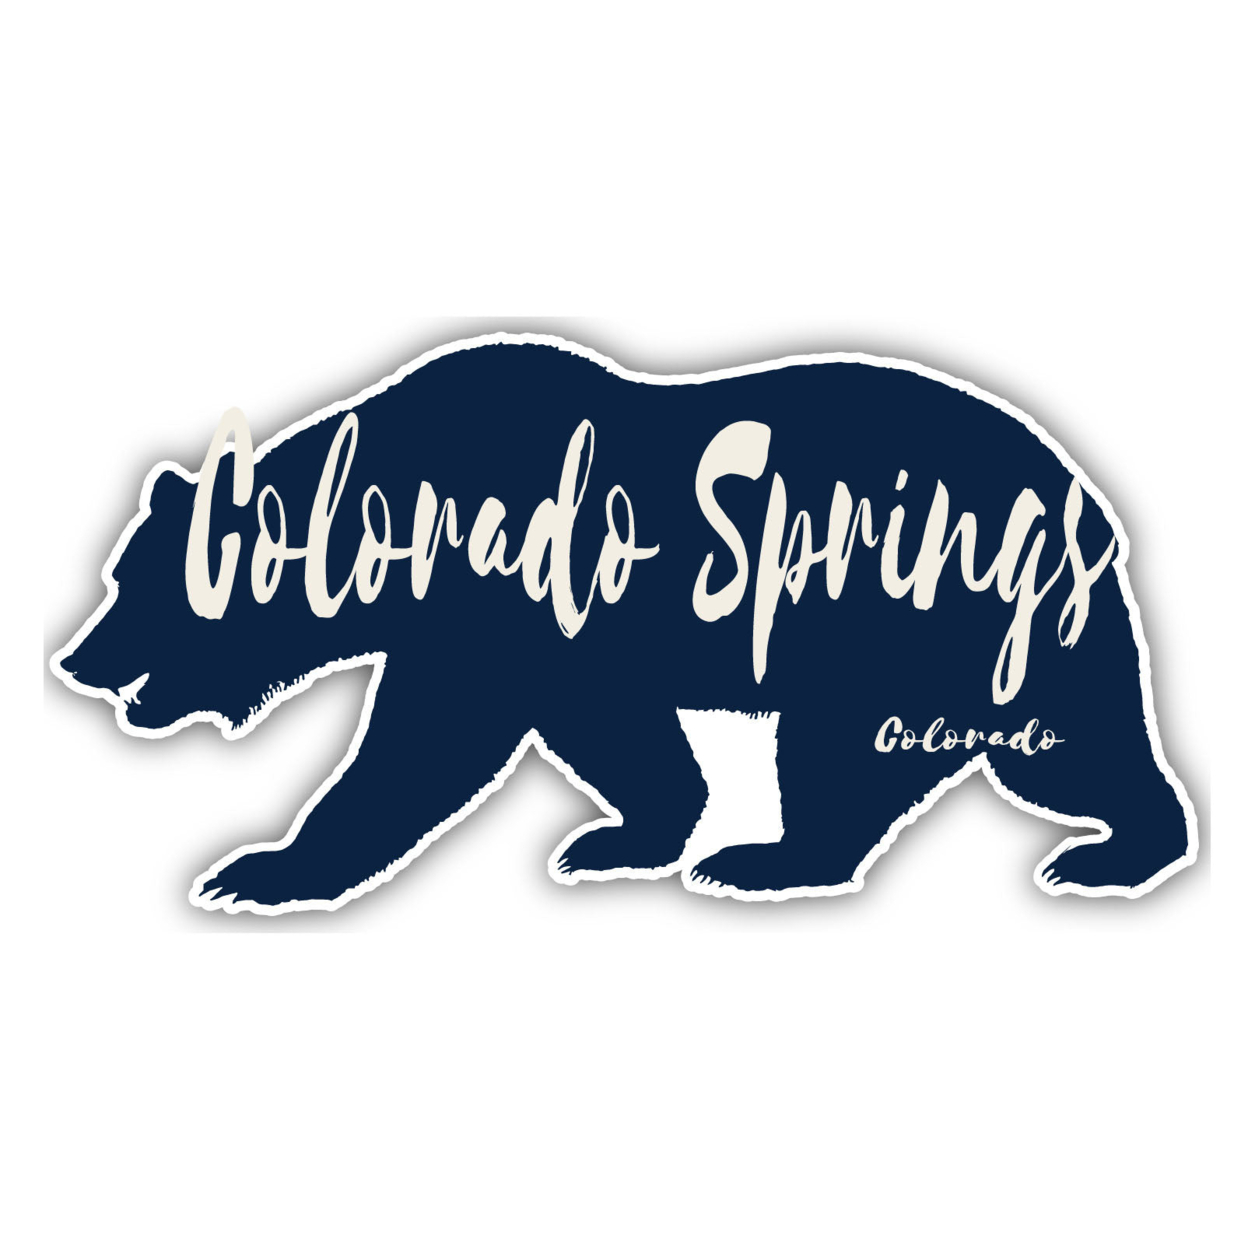 Colorado Springs Colorado Souvenir Decorative Stickers (Choose Theme And Size) - Single Unit, 10-Inch, Tent